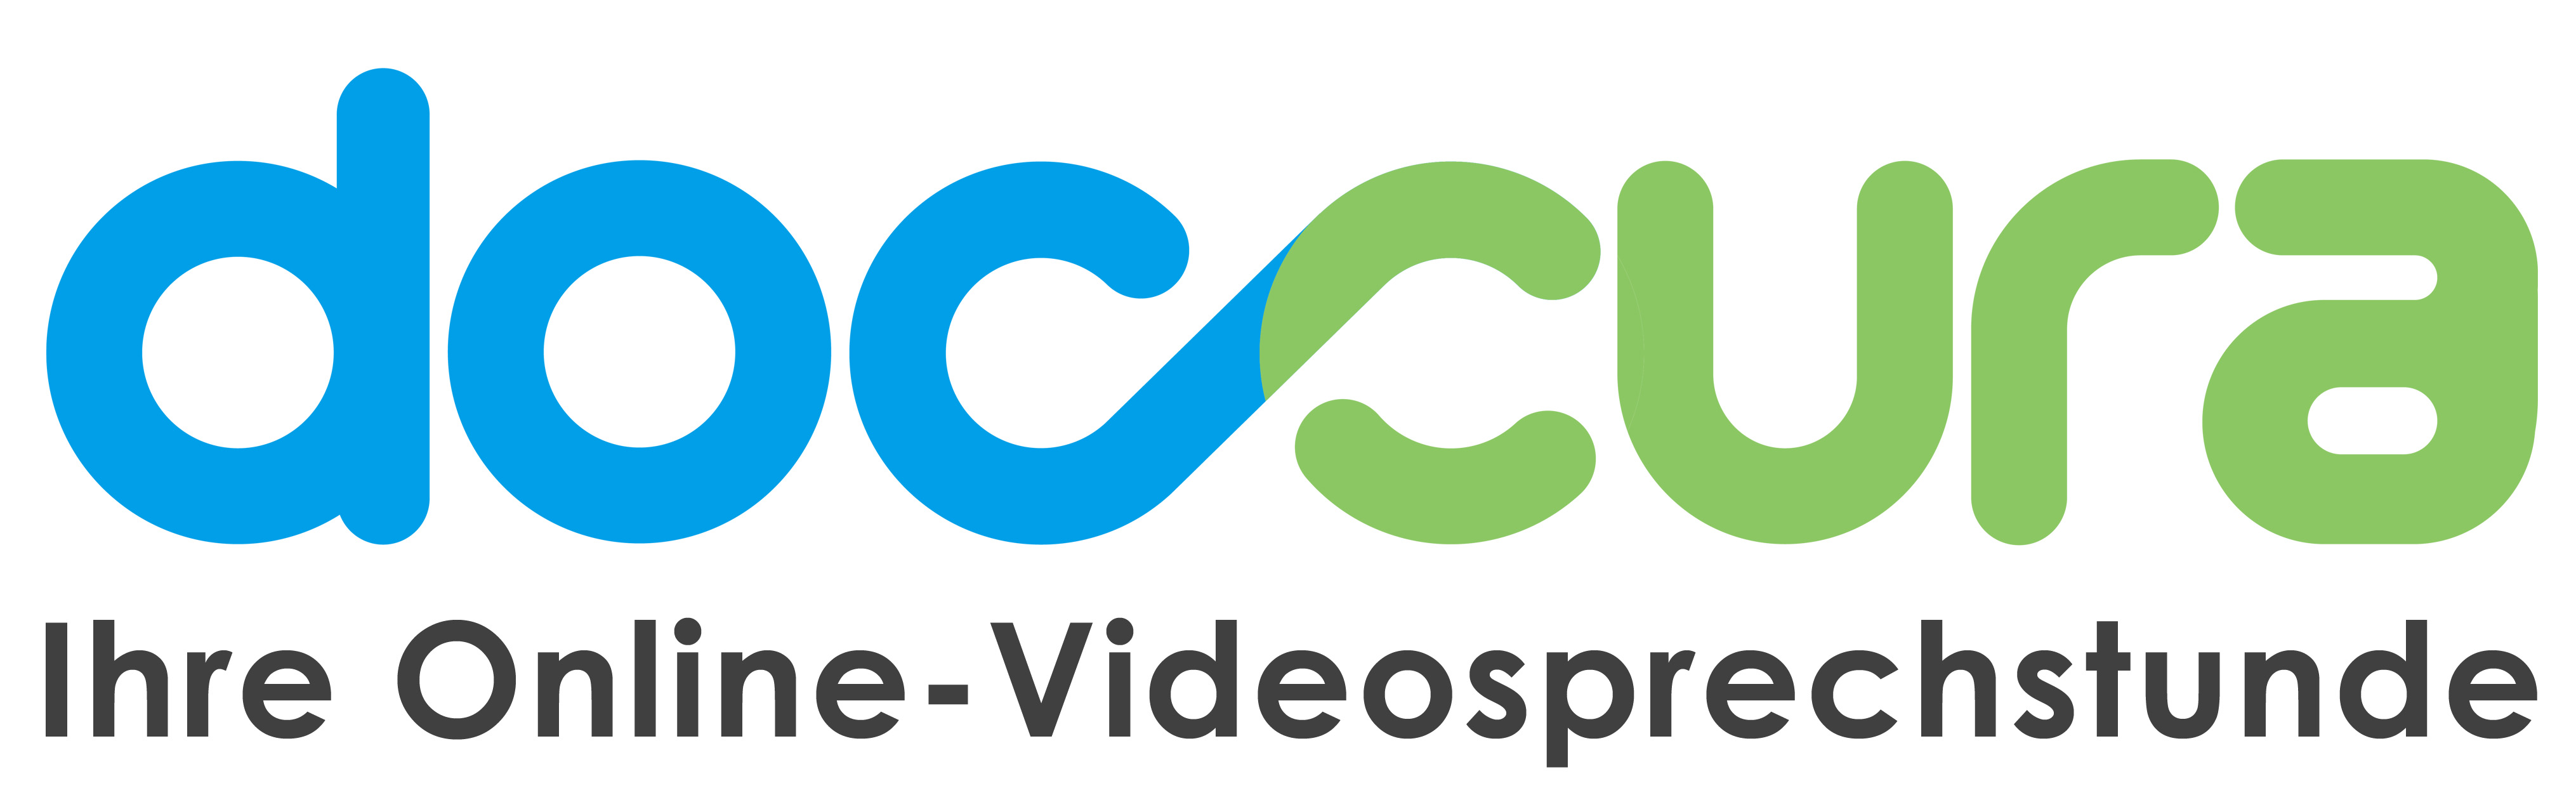 Doccura_Logo.jpeg